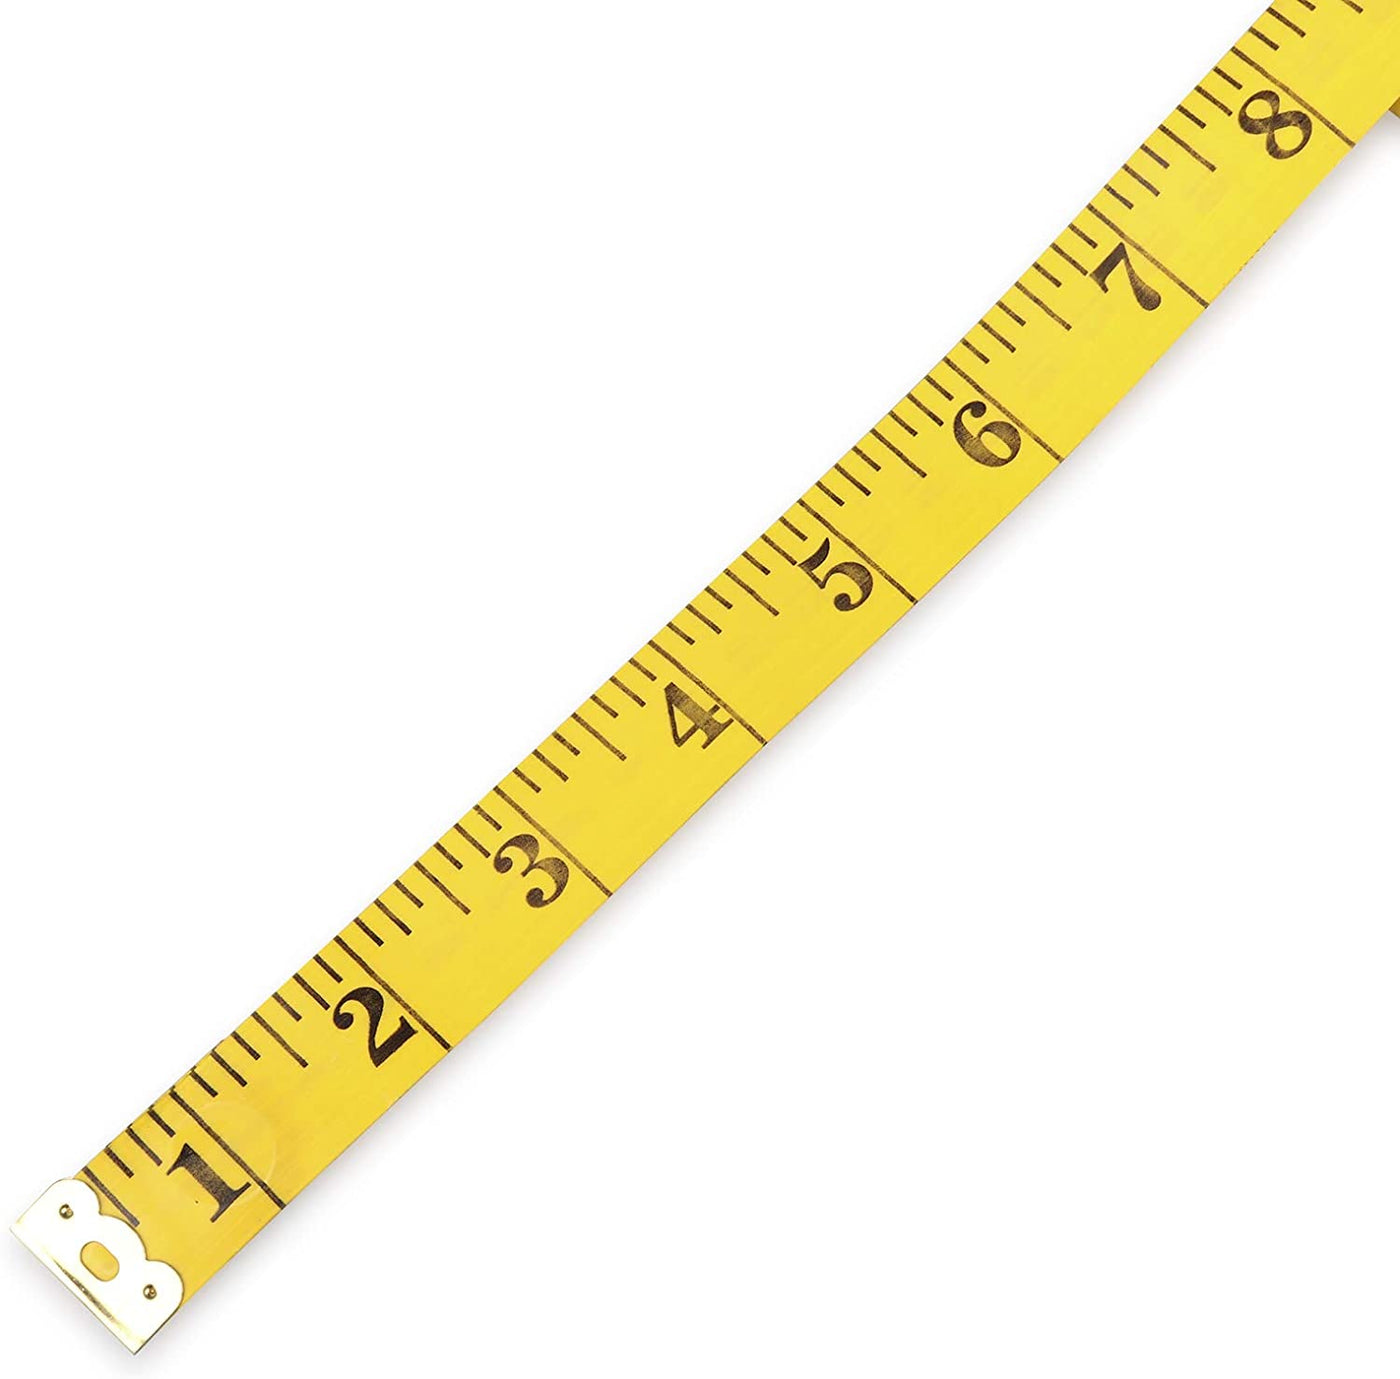 soft measuring tape